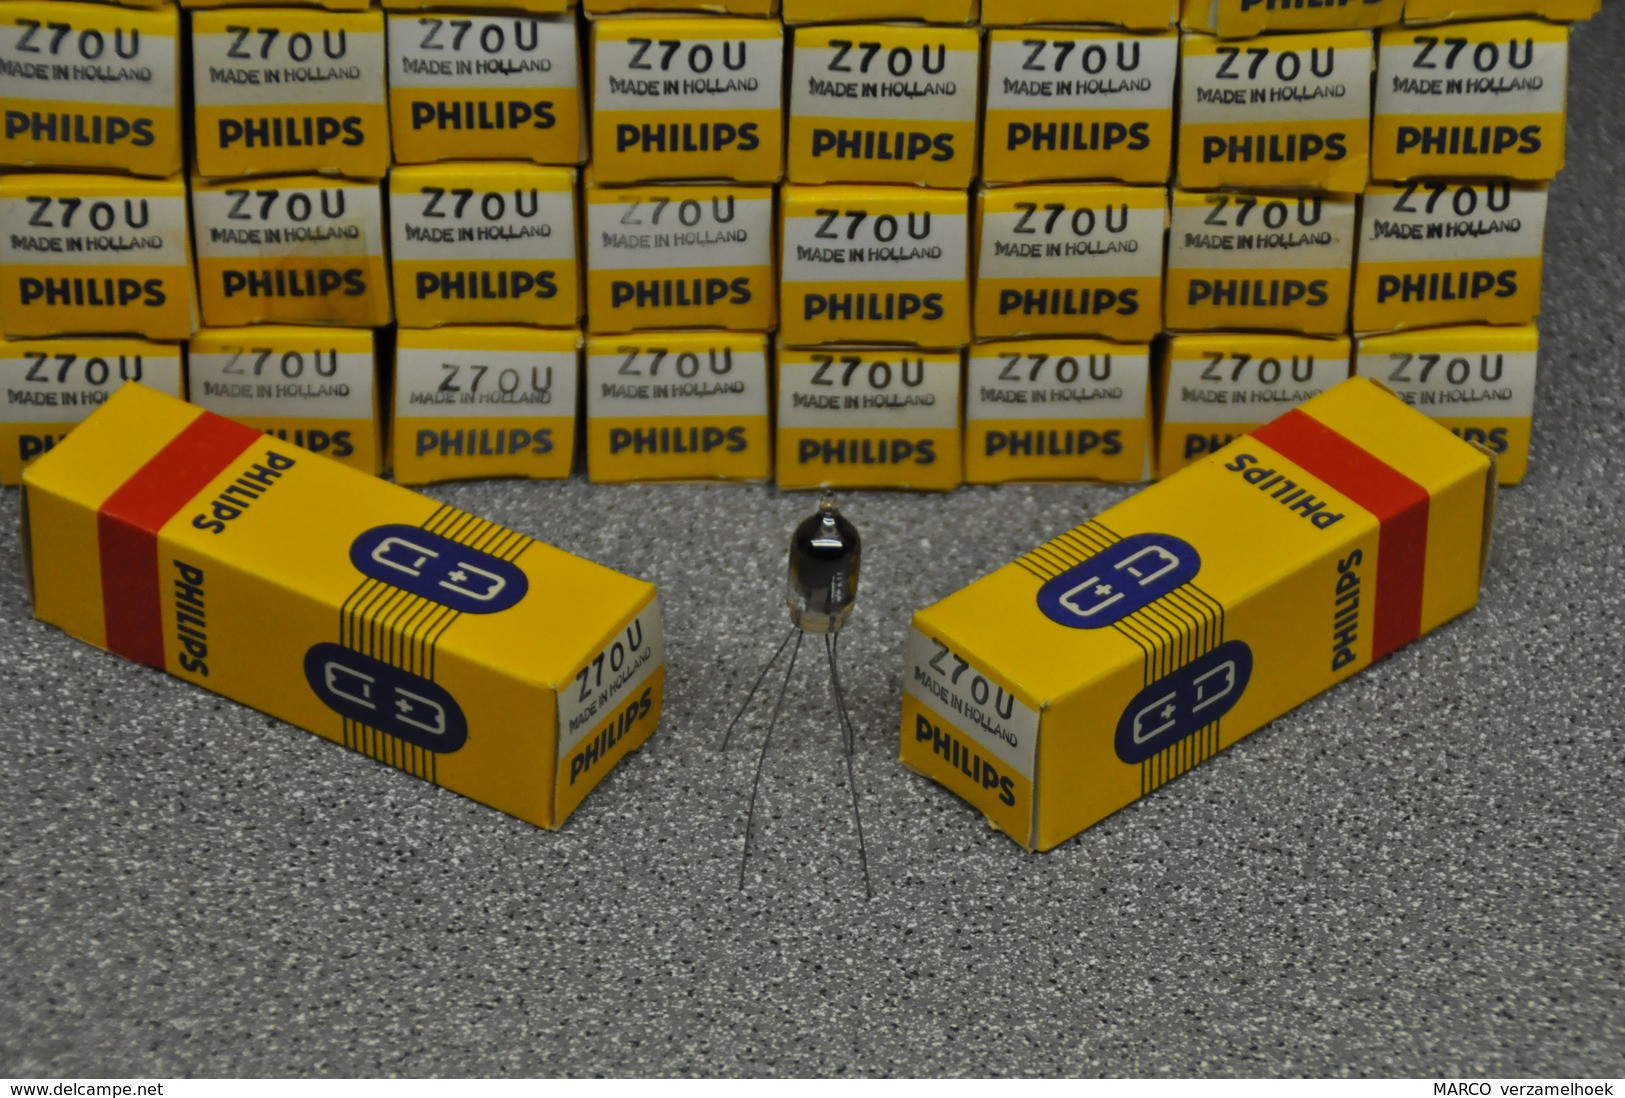 Philips Buis-röhre-tube Z70U - (7710 - GR43) Thyratron Tube New (jukebox) Neonbuisje Glimmröhre - Tubes